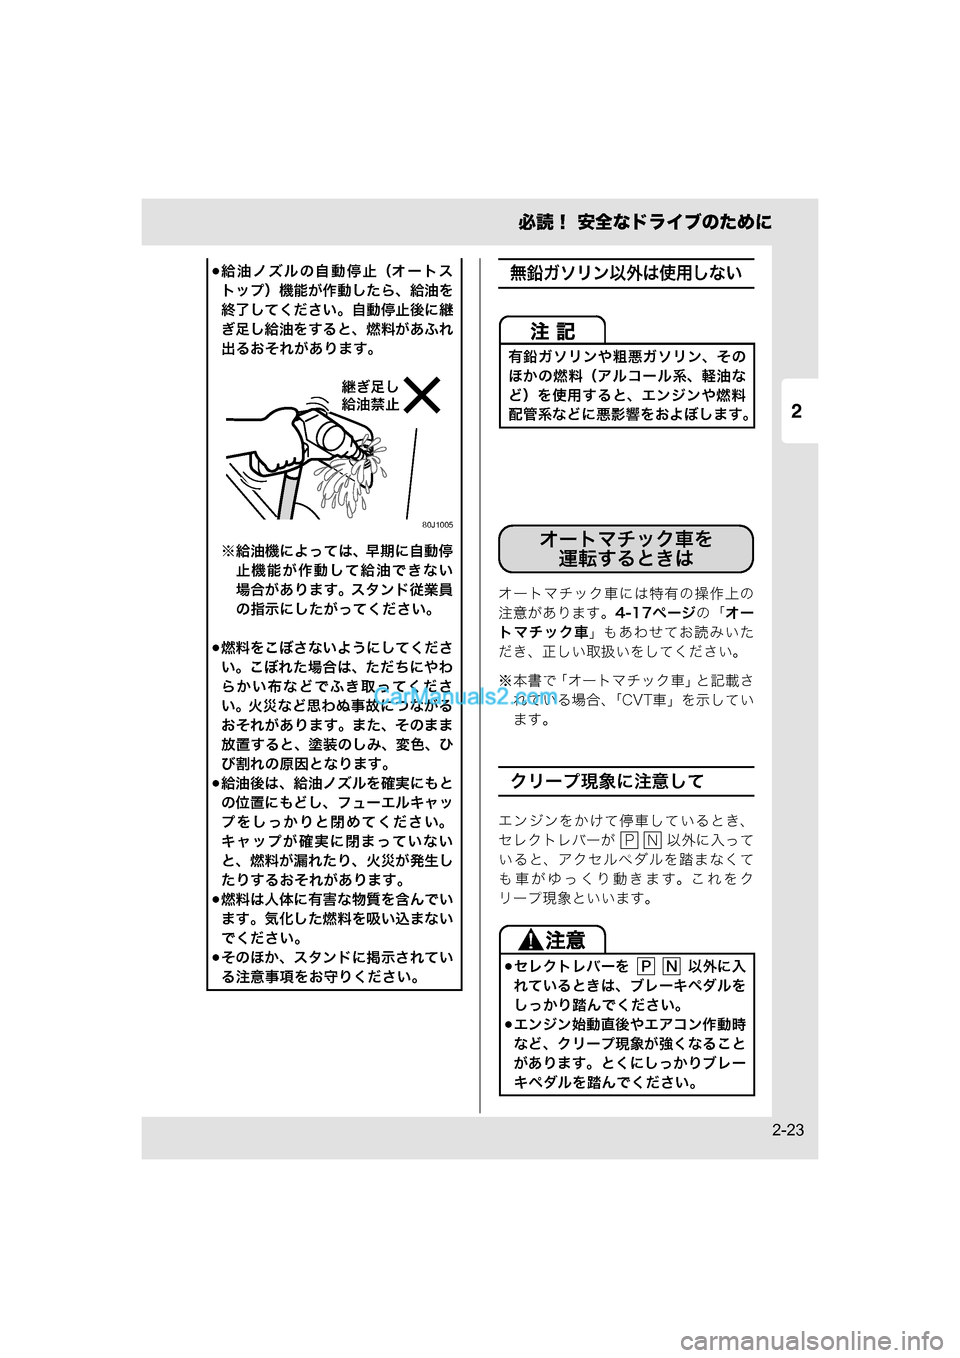 MAZDA MODEL CARROL 2015  取扱説明書 (キャロル) (in Japanese) 2
必読！ 安全なドライブのために
2-23
無鉛ガソリン以外は使用しない
オートマチック車には特有の操作上の
注意があります。4-17ページの「オー
ト�